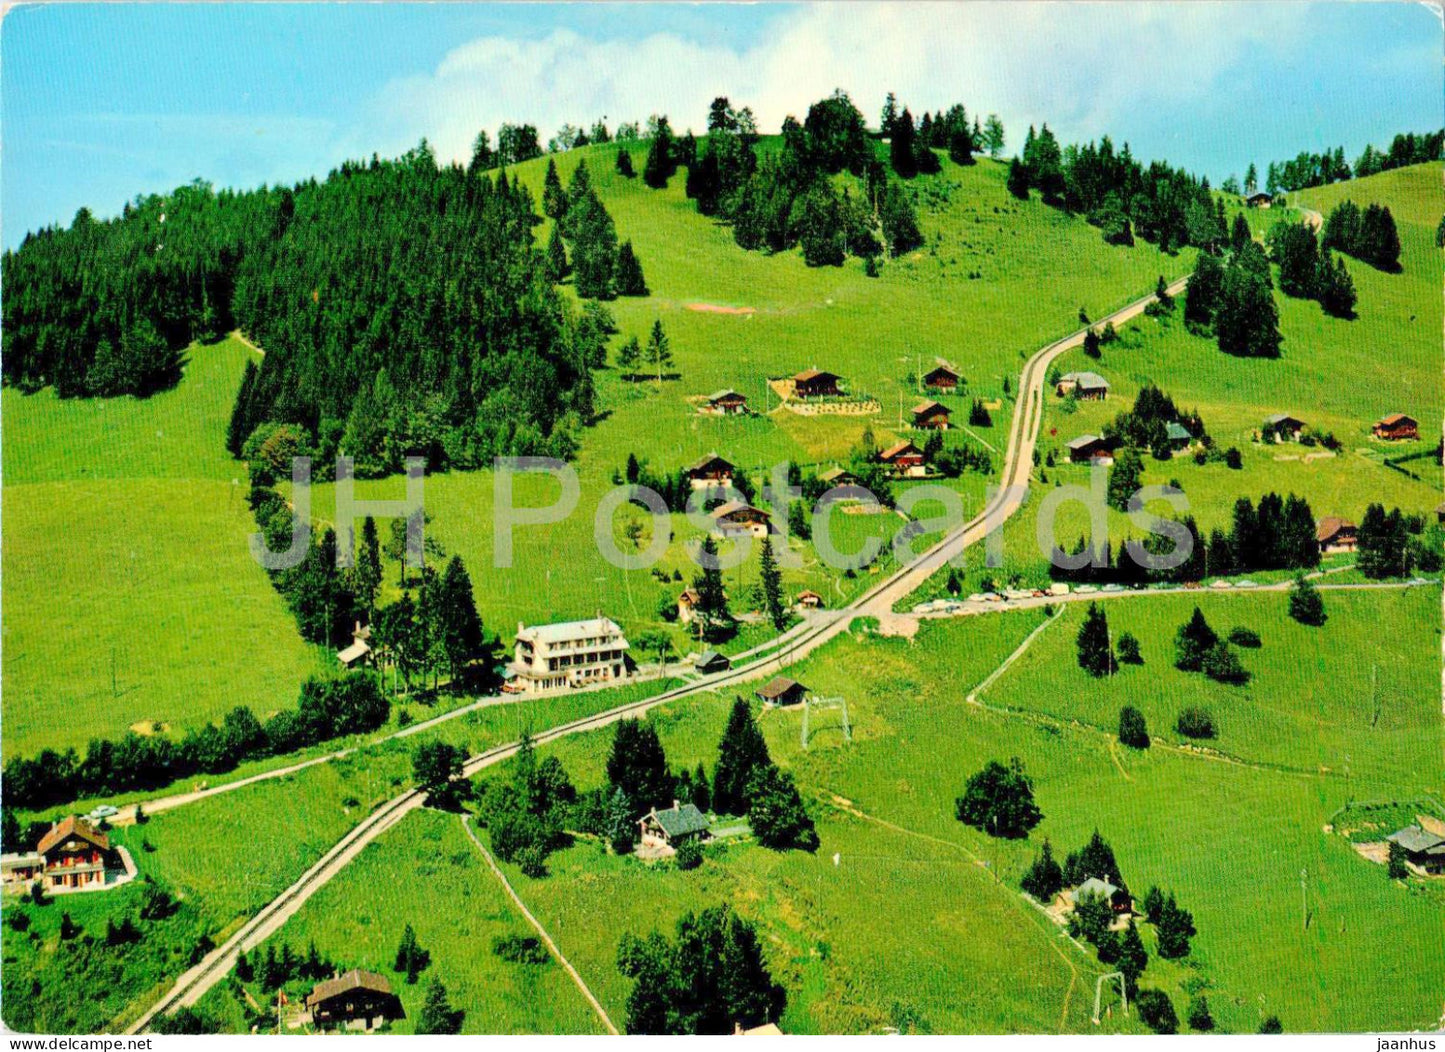 Lally - Vevey - hotel restaurant Les Sapins - 8065 - Switzerland - unused - JH Postcards